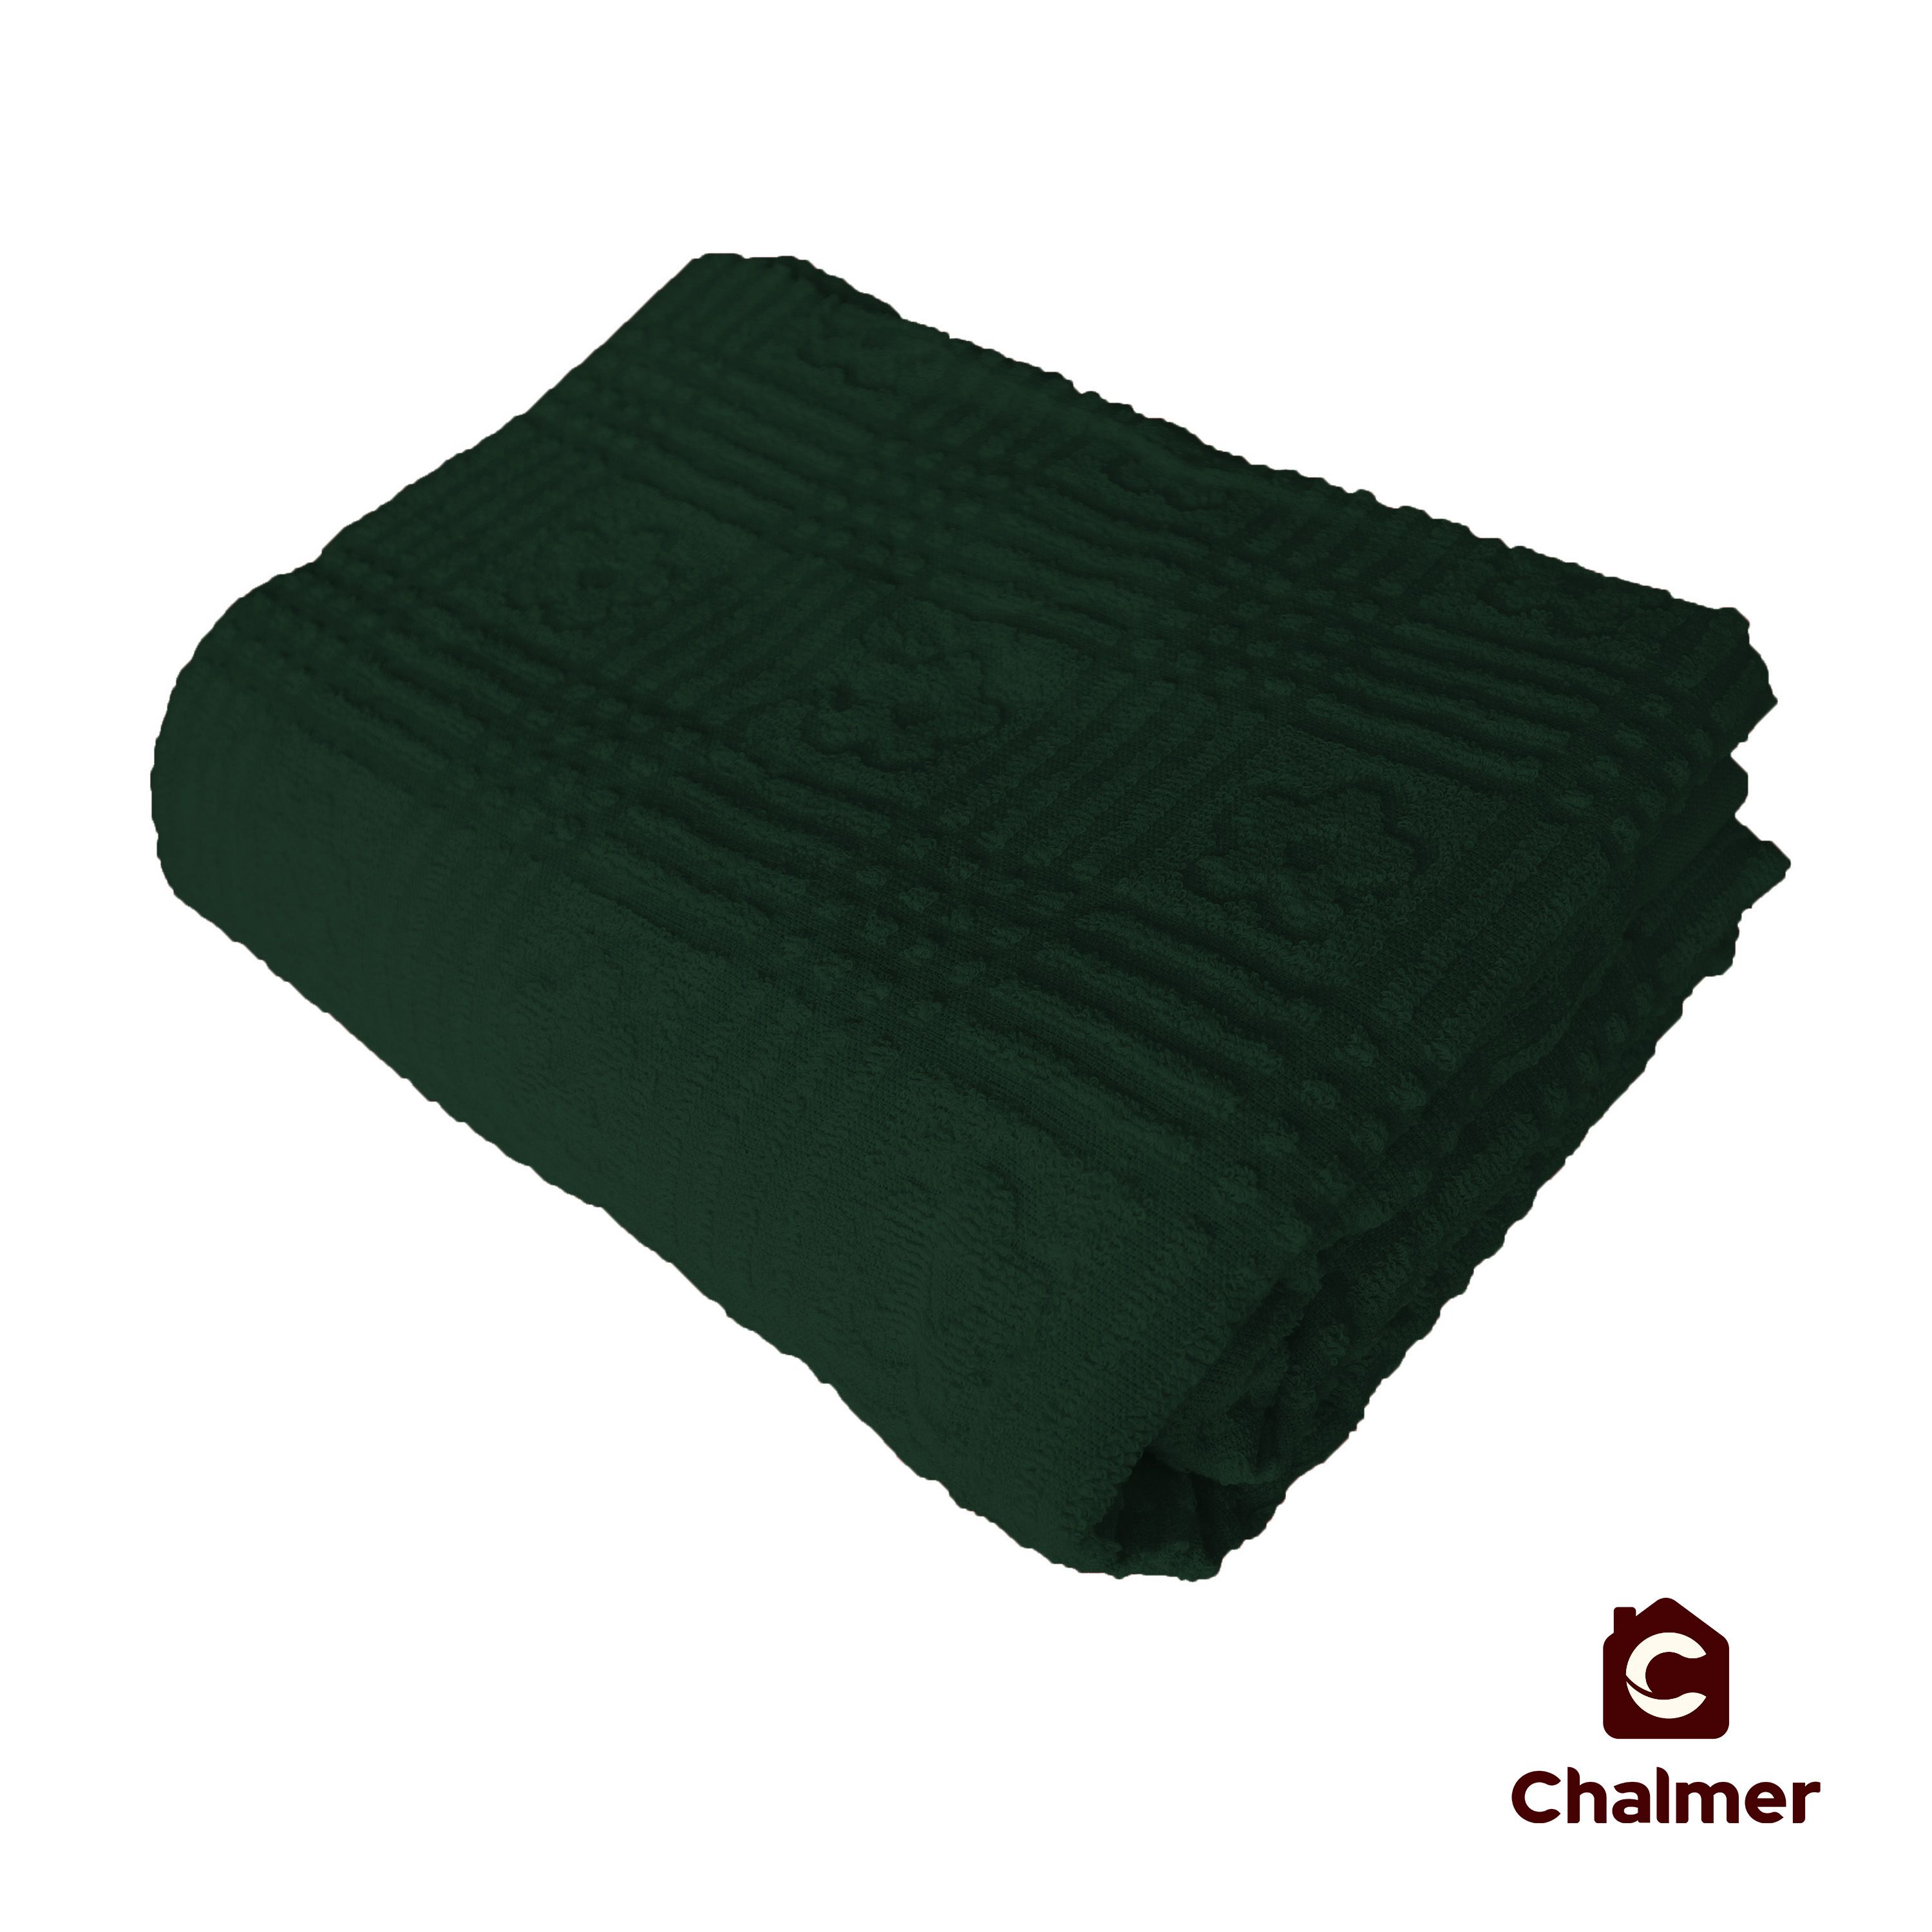 Selimut Katun Merek Chalmer Ukuran 145x200 Terry Cloth Towel Blanket - Dark Green - 1